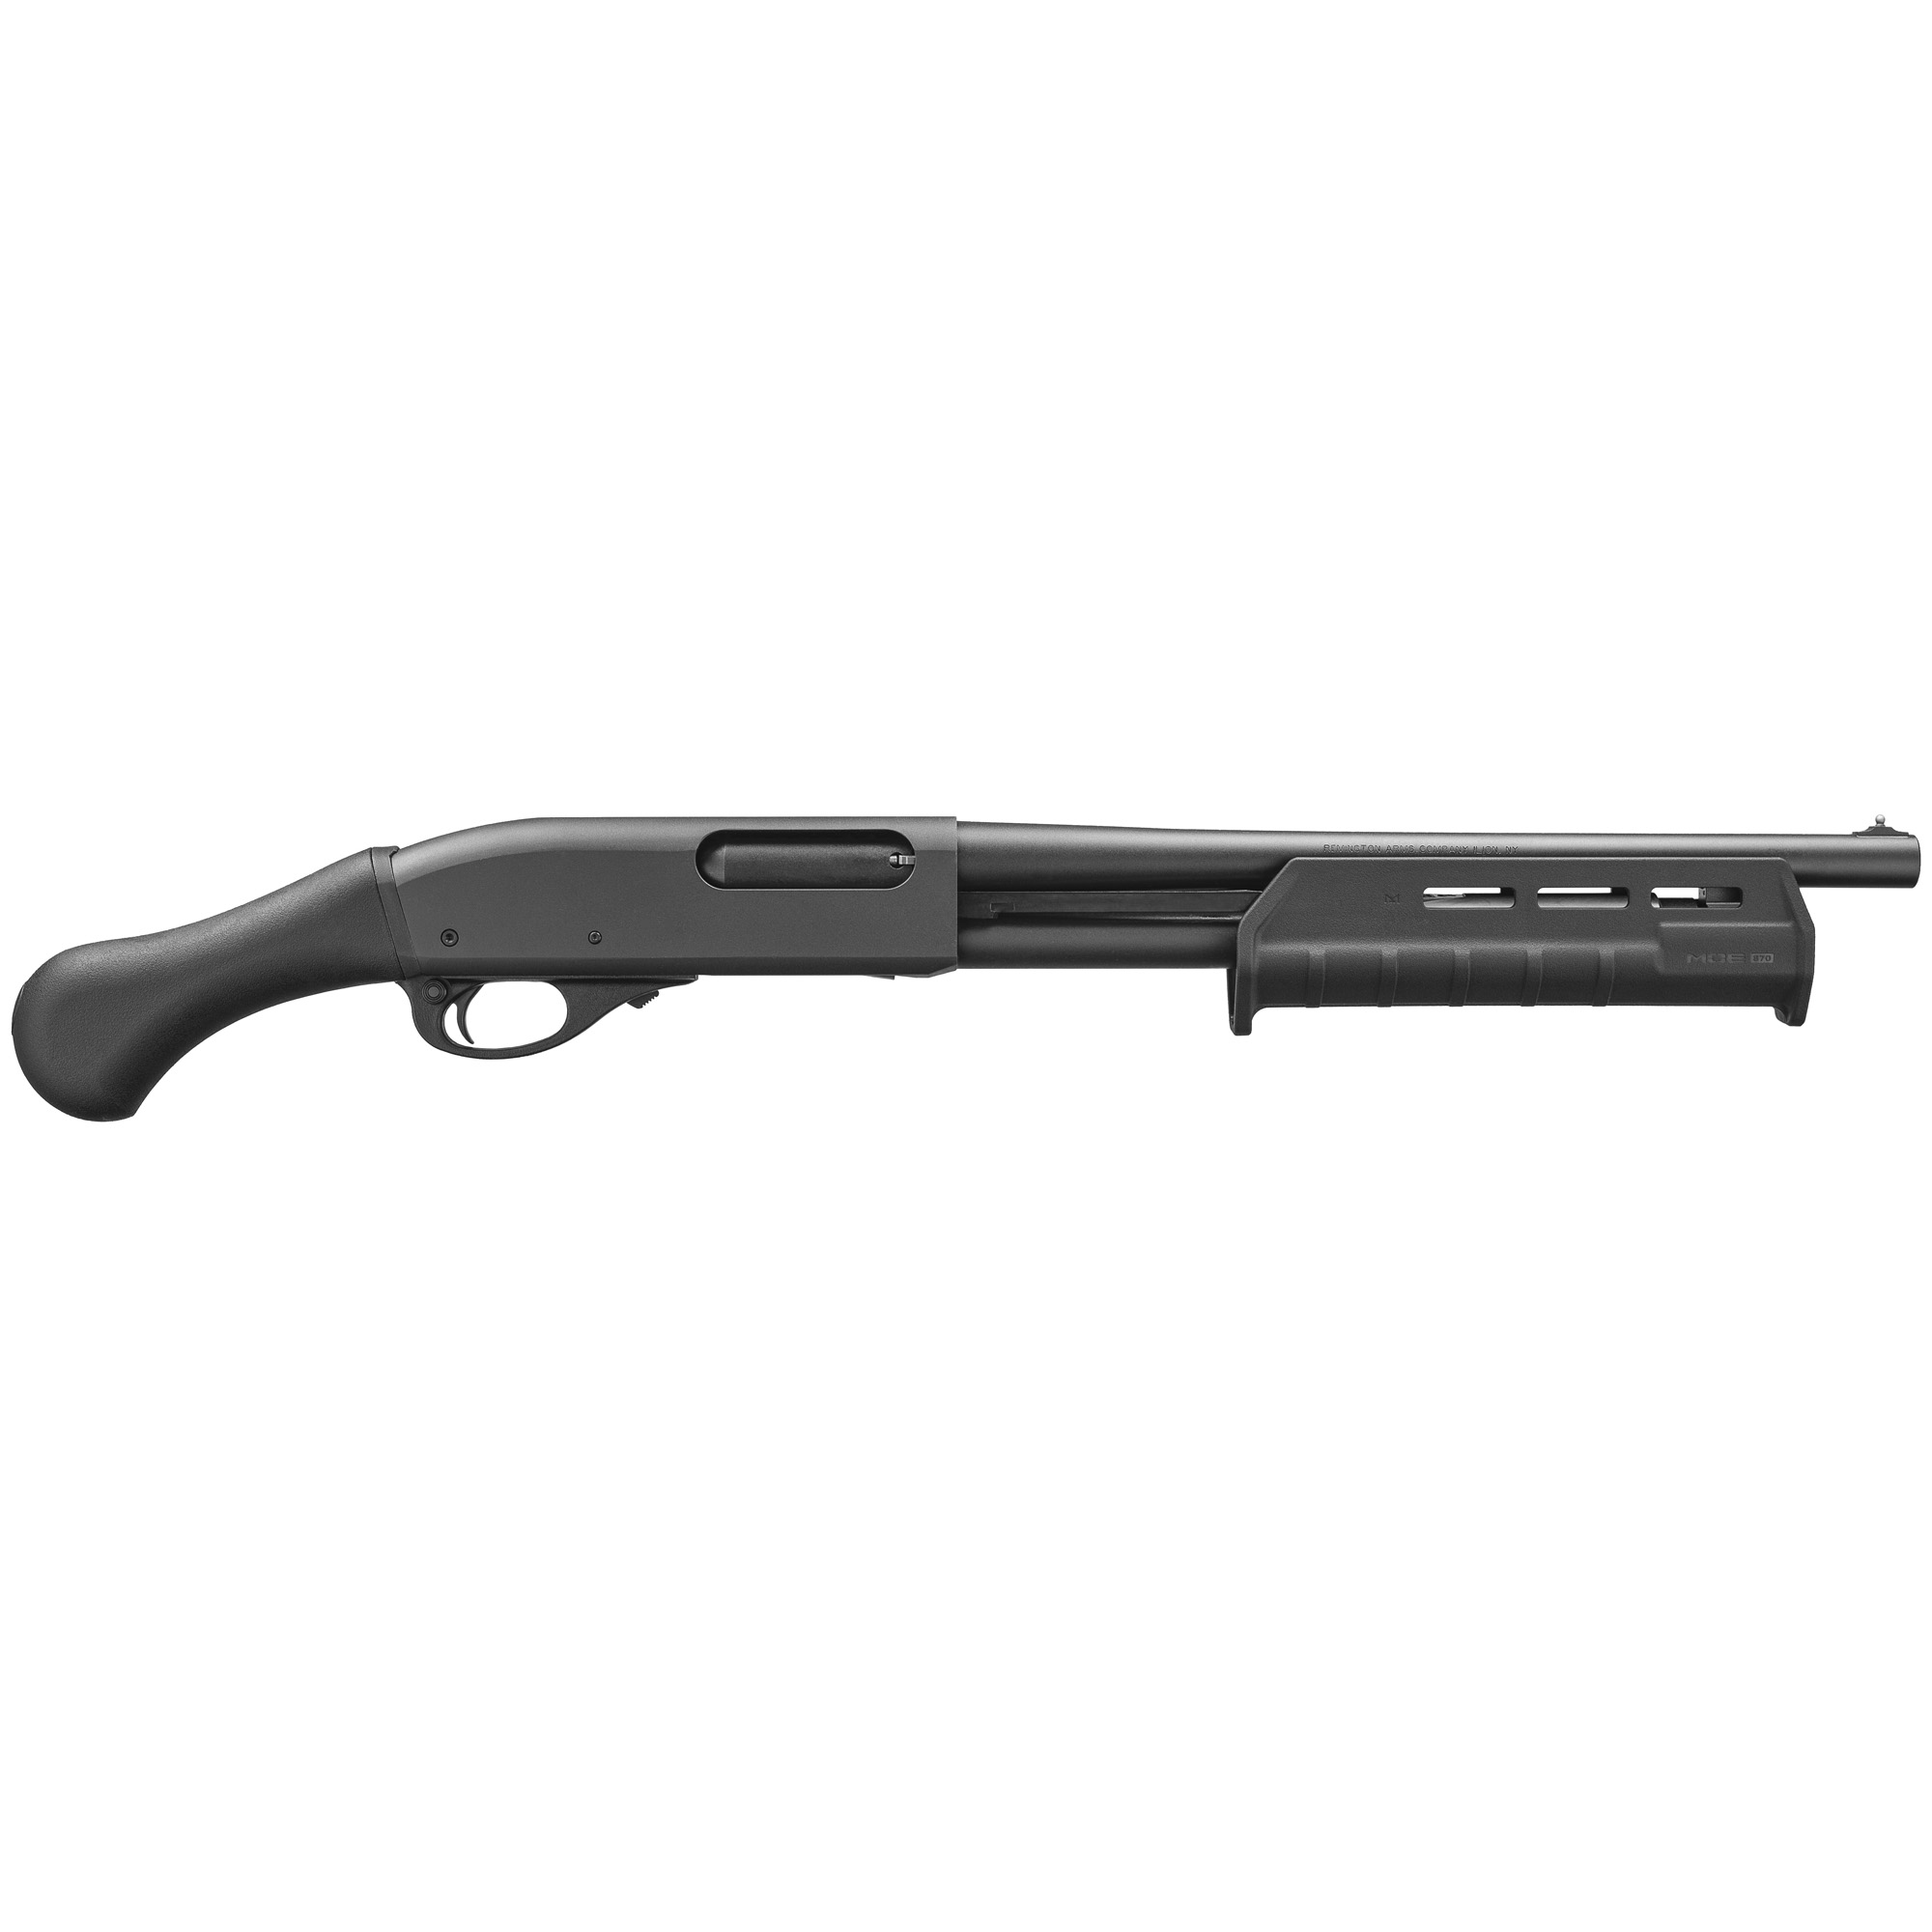 https://cityarsenal.com/product/remington-870-tac-14-20-ga-pump-action-shotgun-black-r81145/